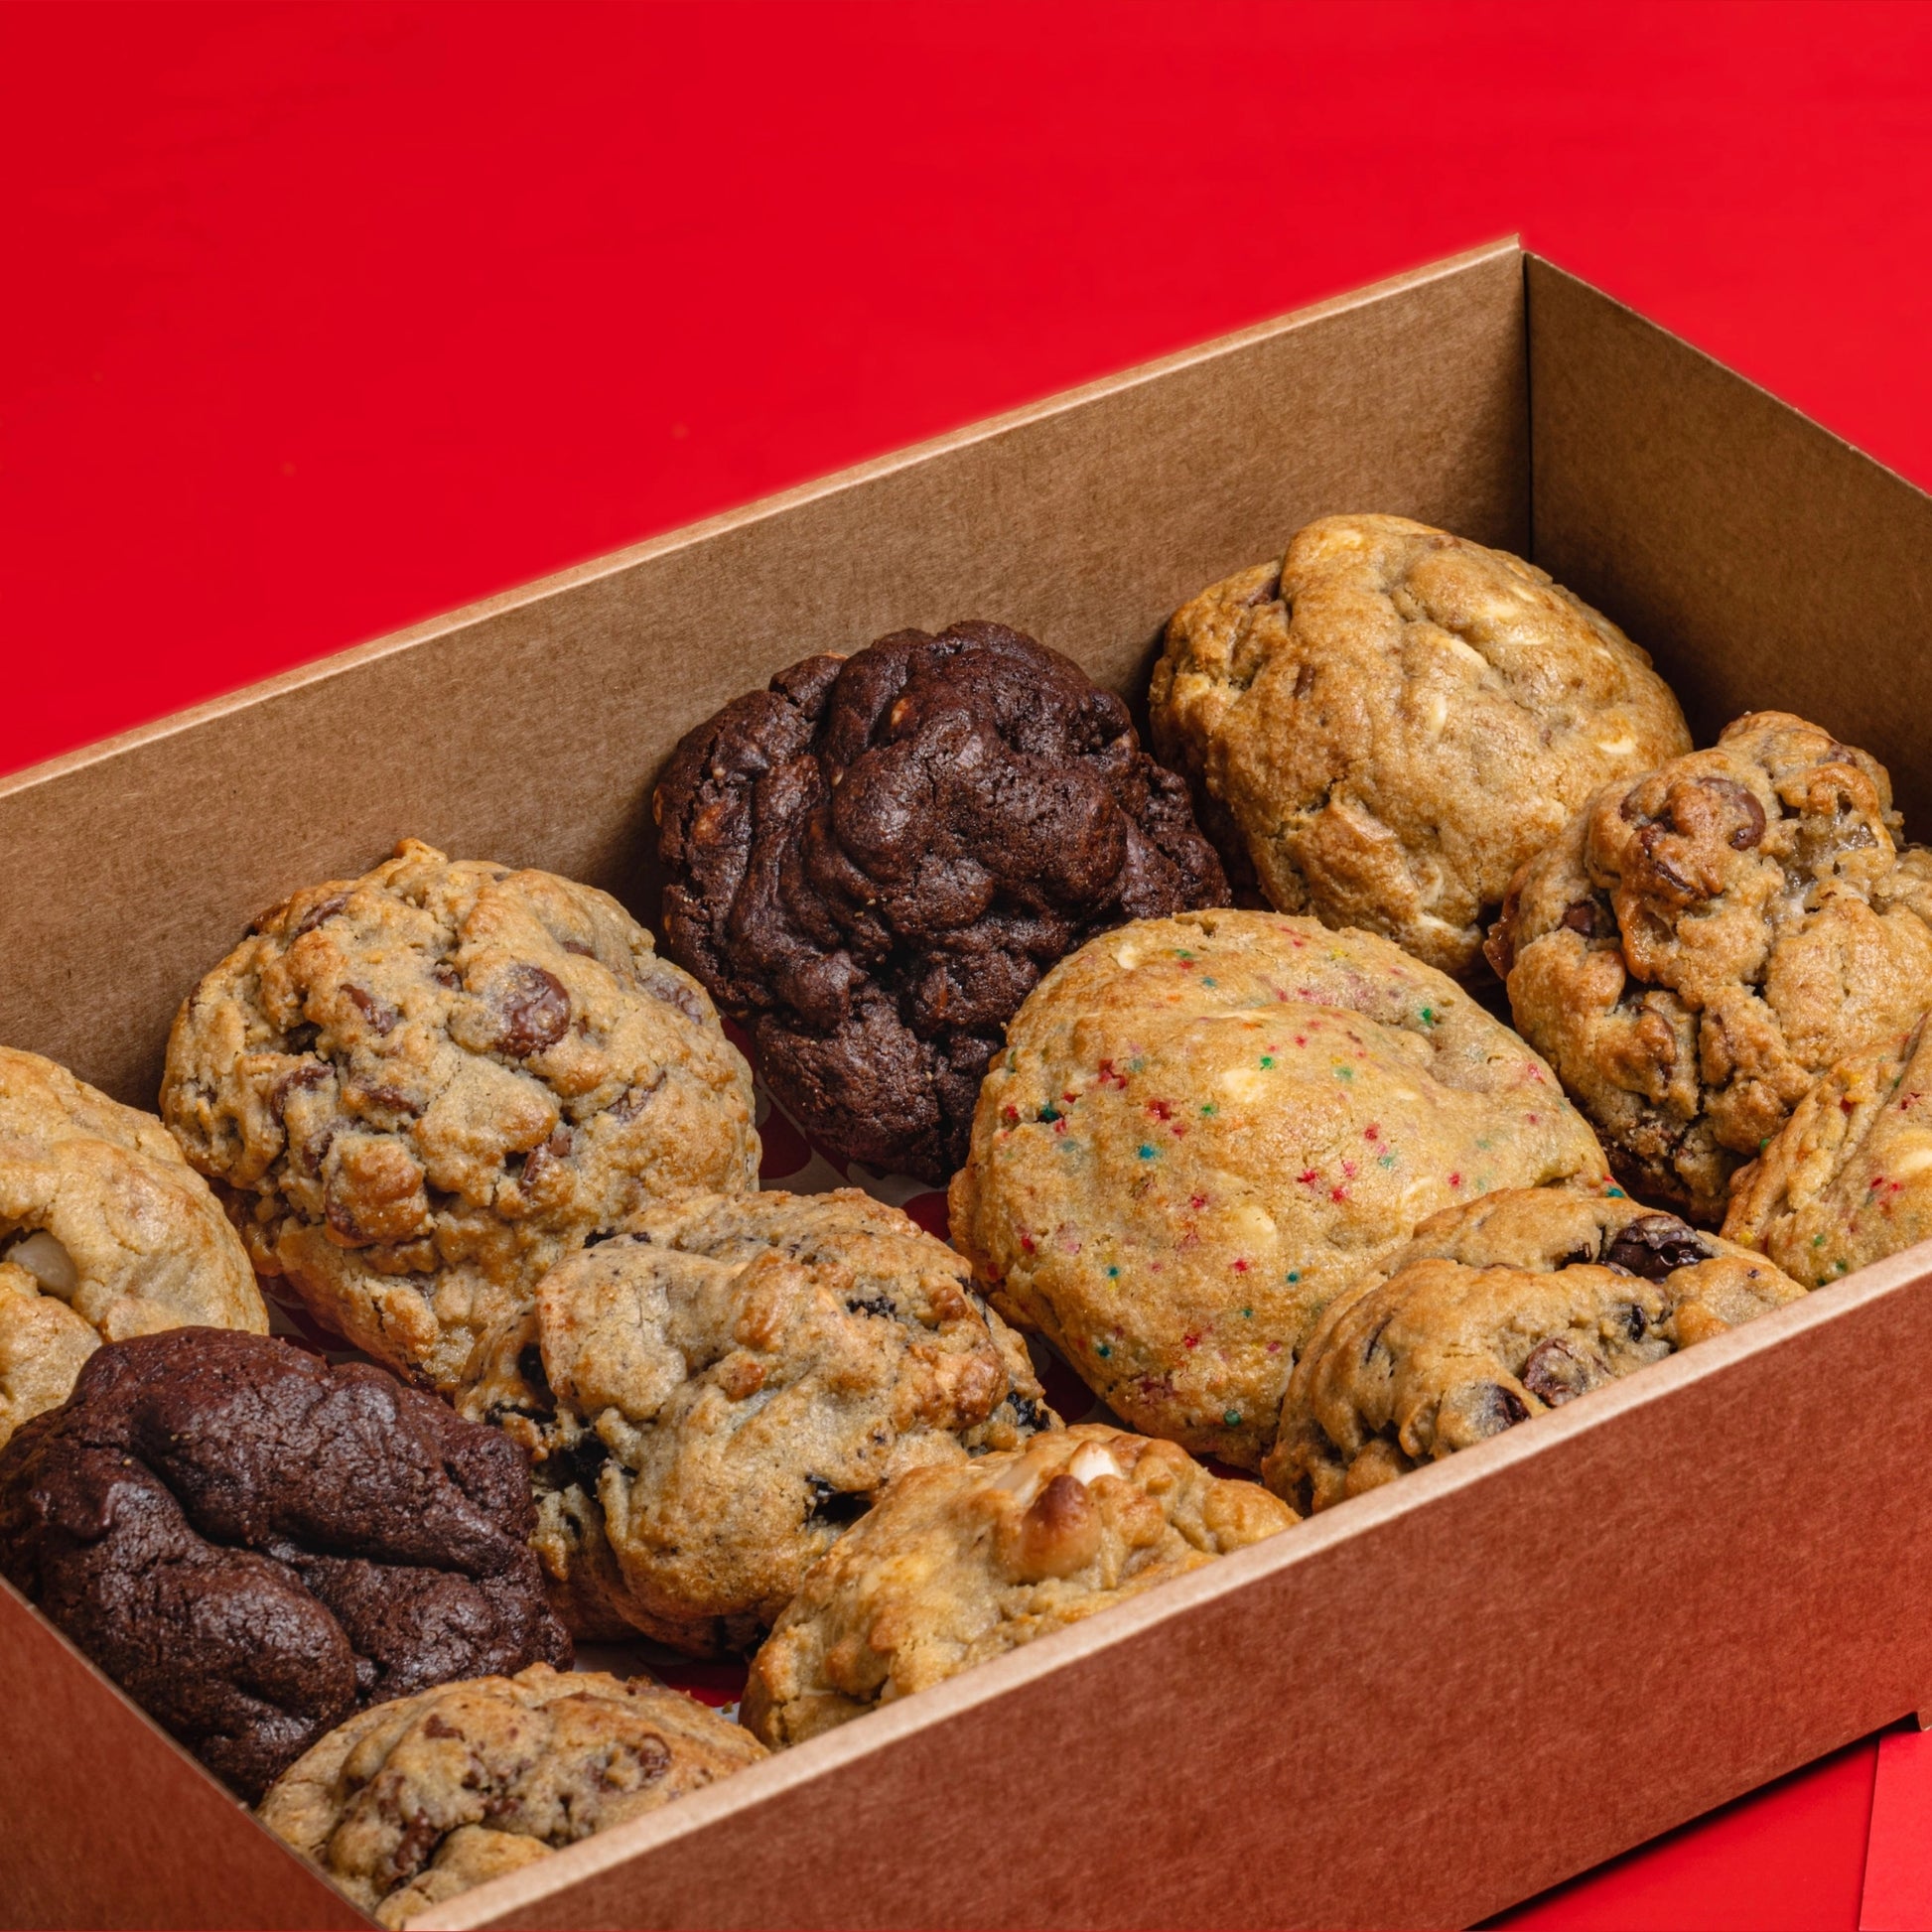 Box of Twelve Cookies